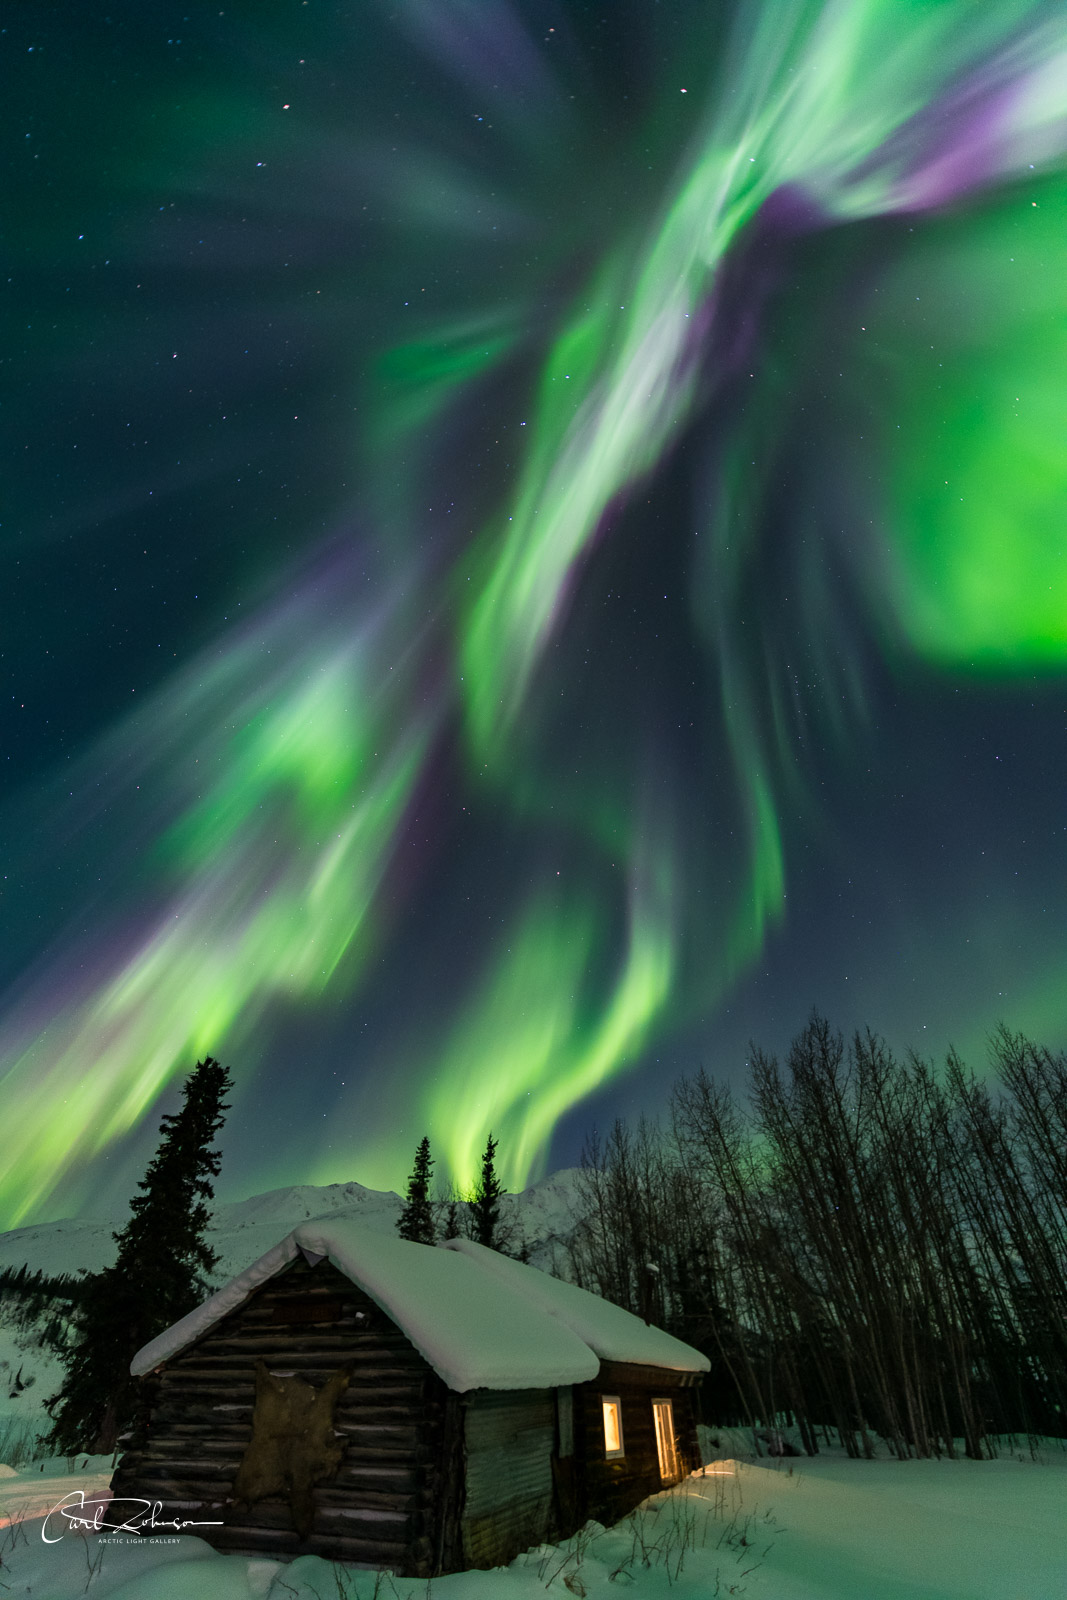 The aurora borealis soars over the Johnson cabin in Wiseman, Alaska.